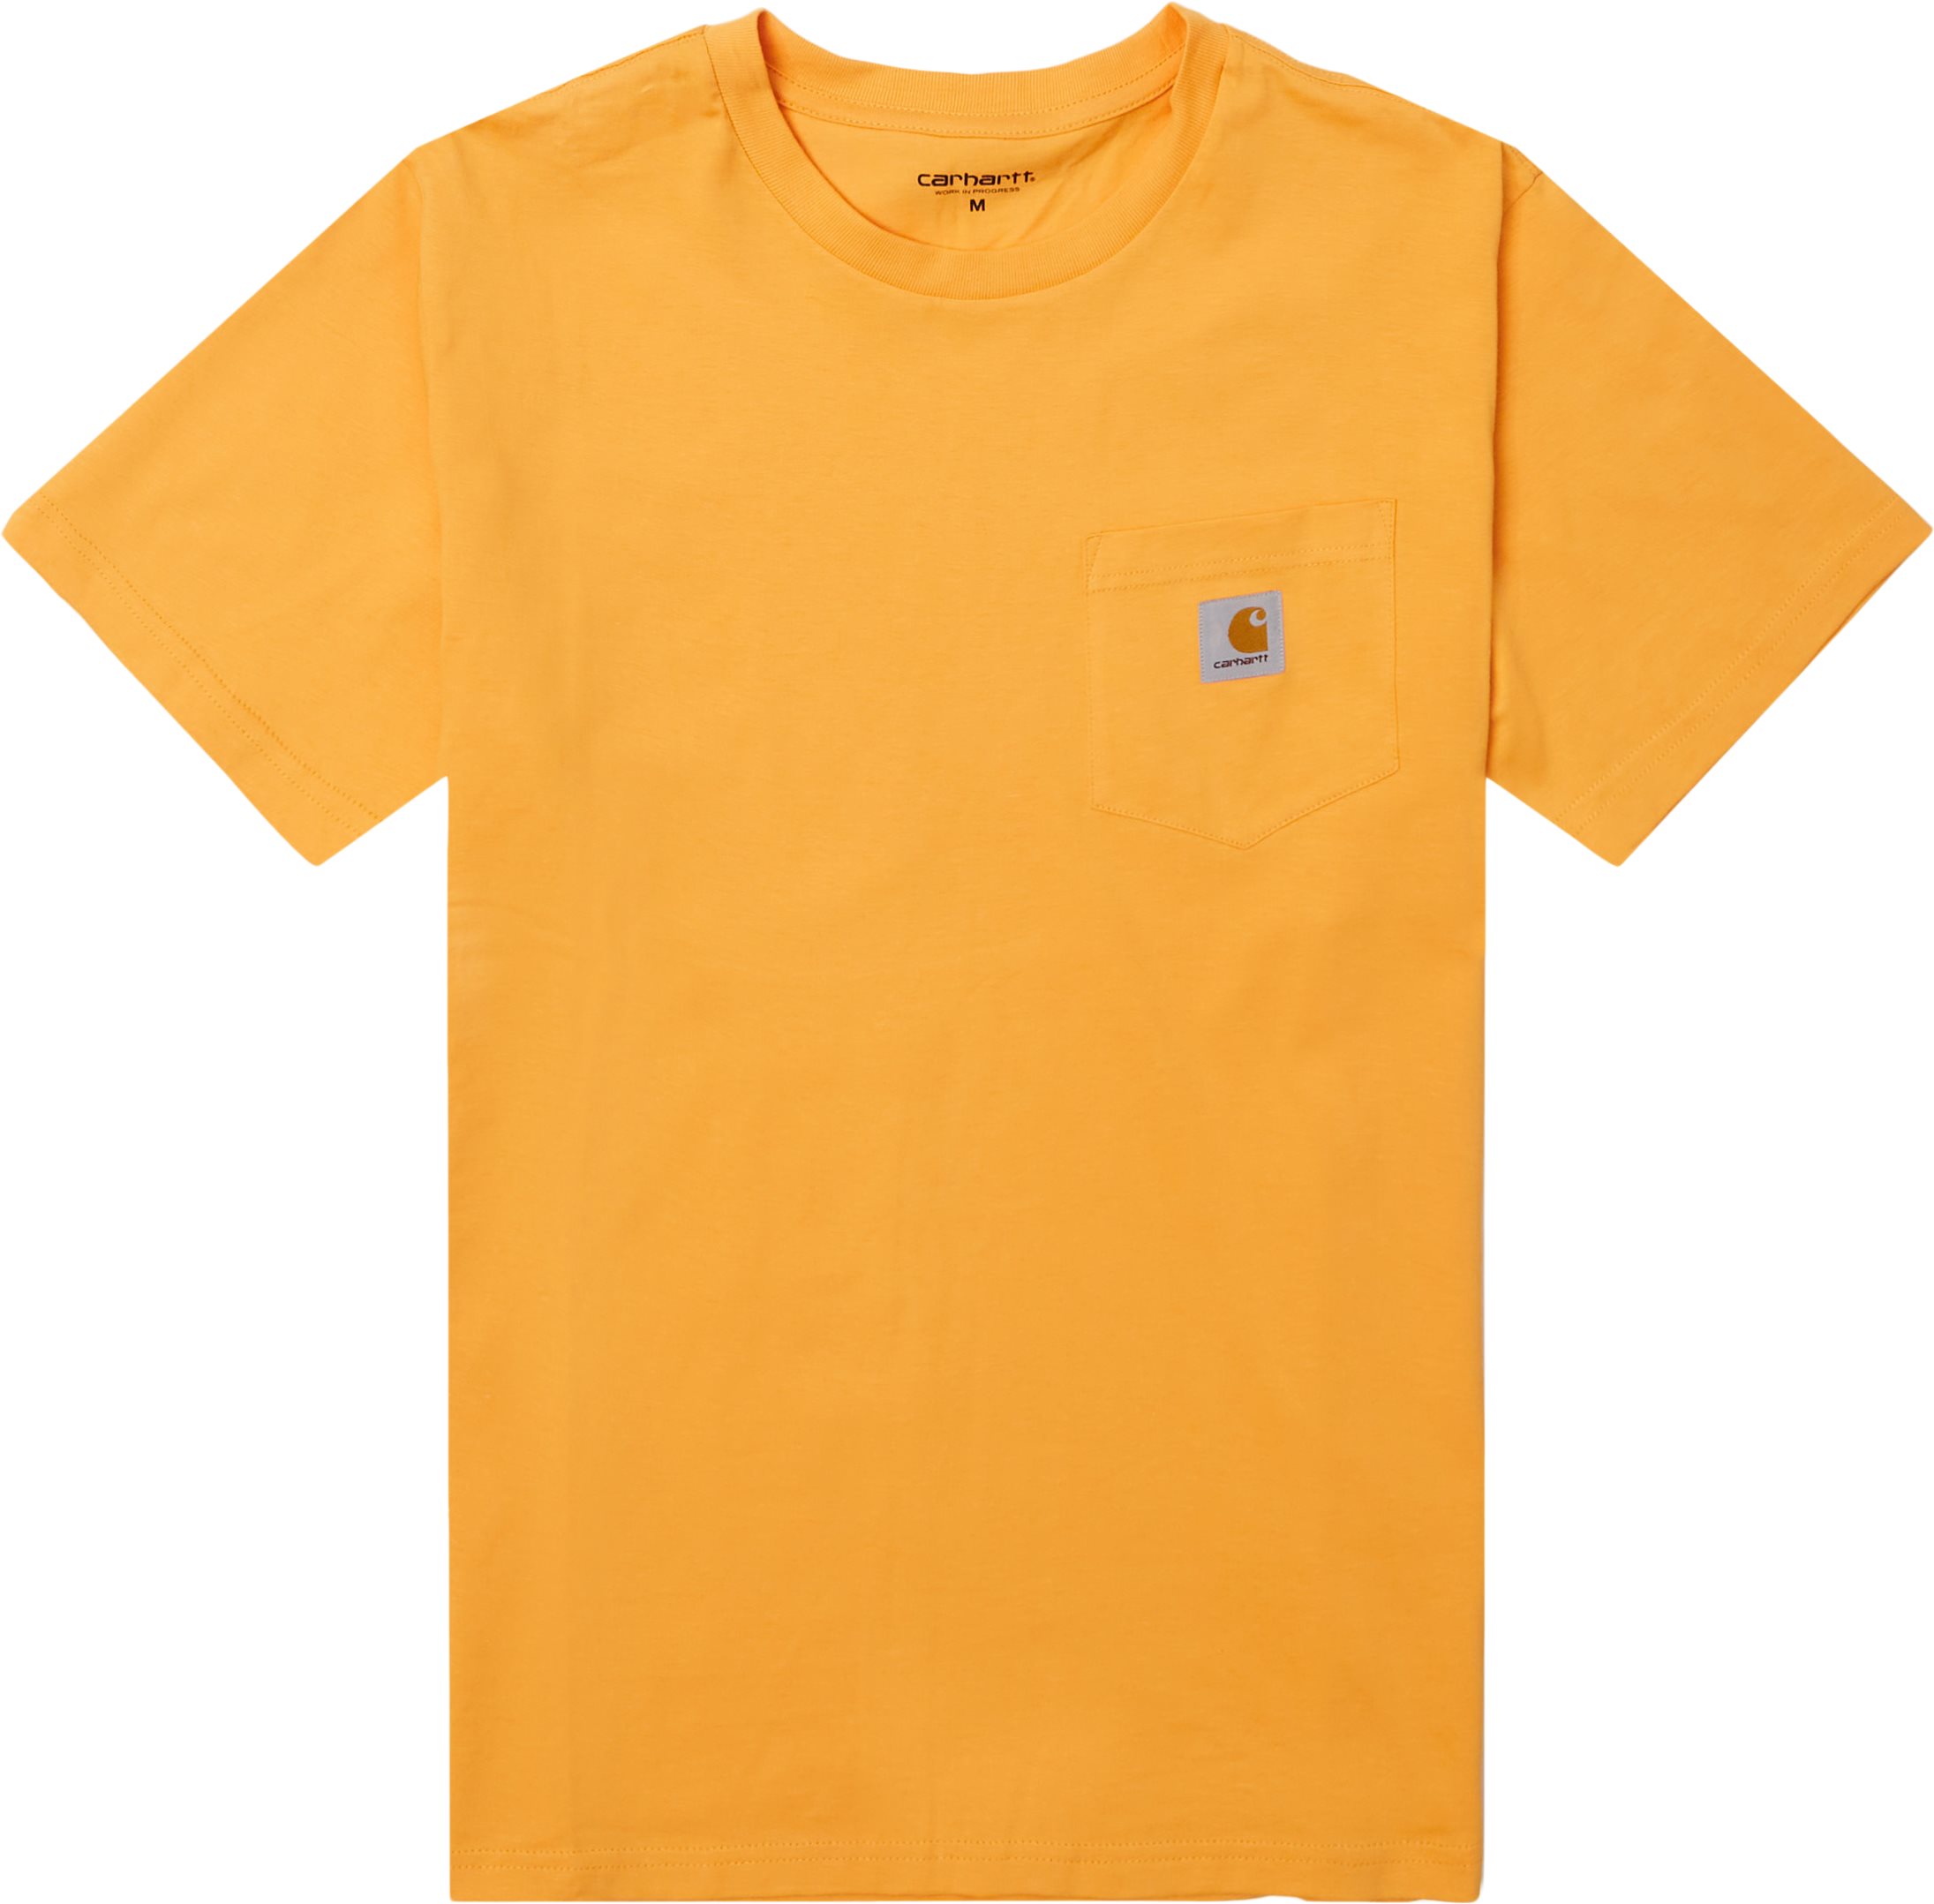 Ficka Tee - T-shirts - Regular fit - Orange